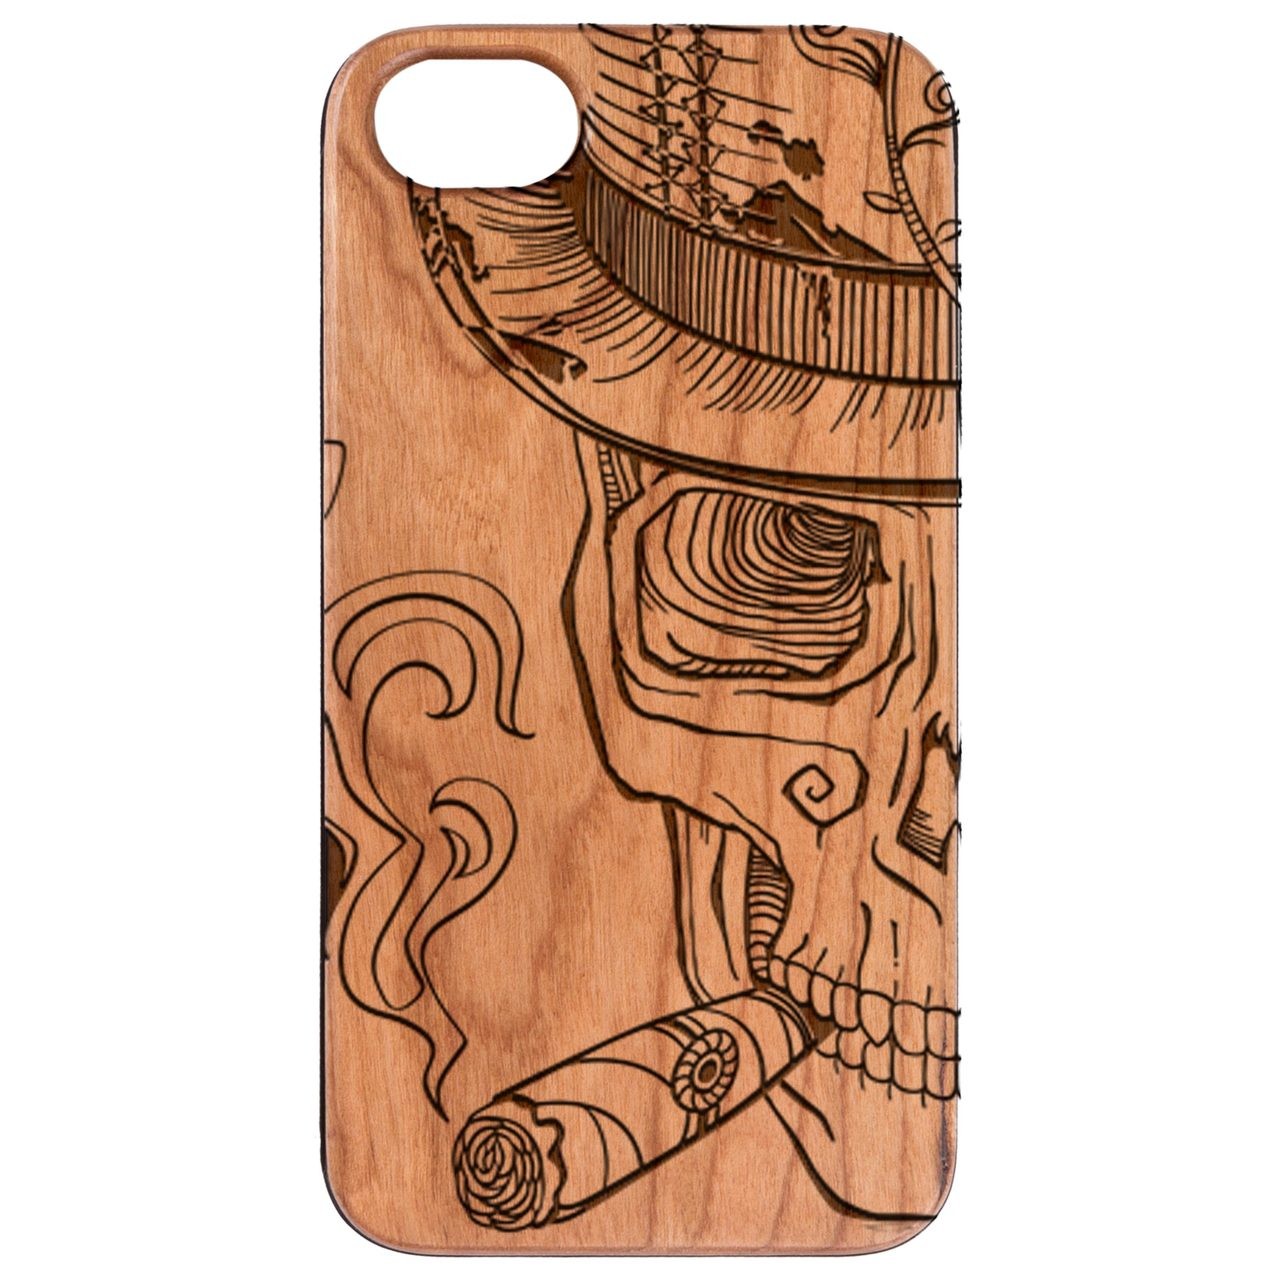  Smoking Skull - Engraved - Wooden Phone Case - IPhone 13 Models